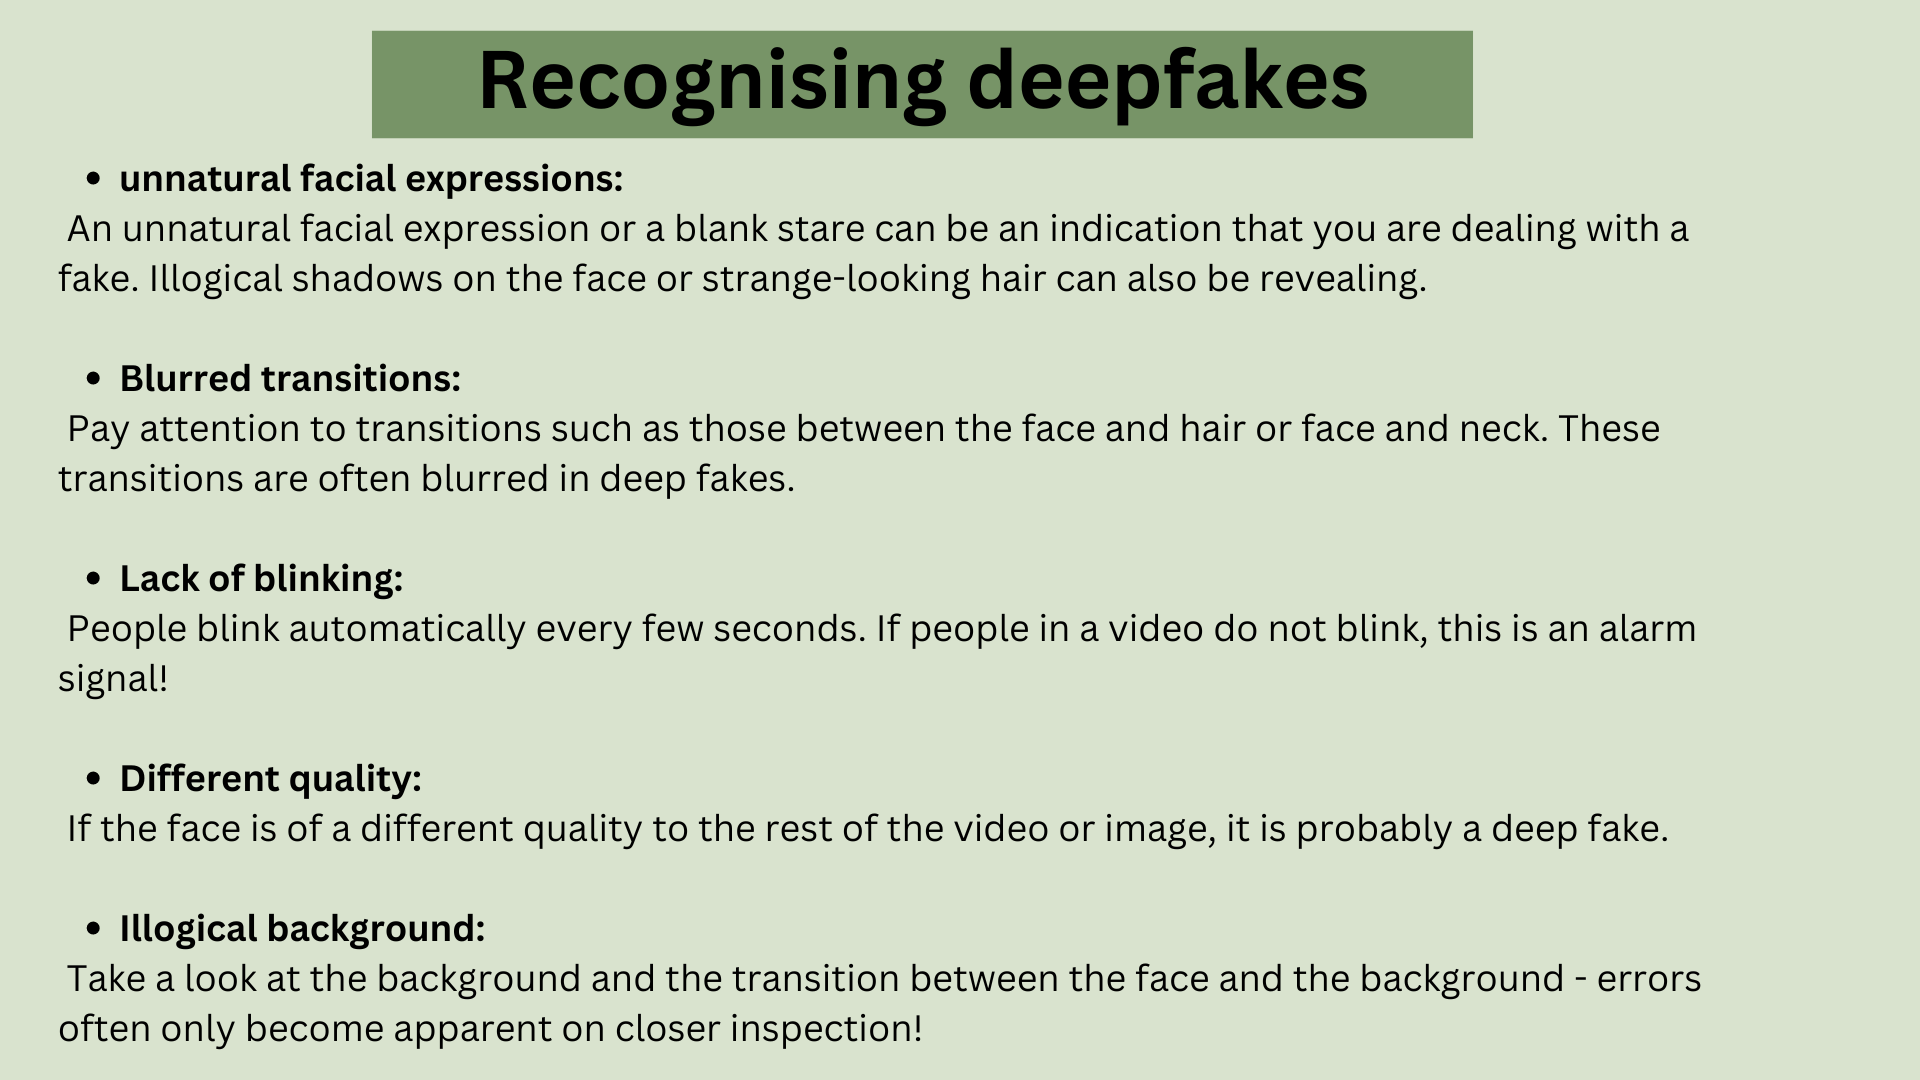 uploads/6693/recognising_deepfakes.png